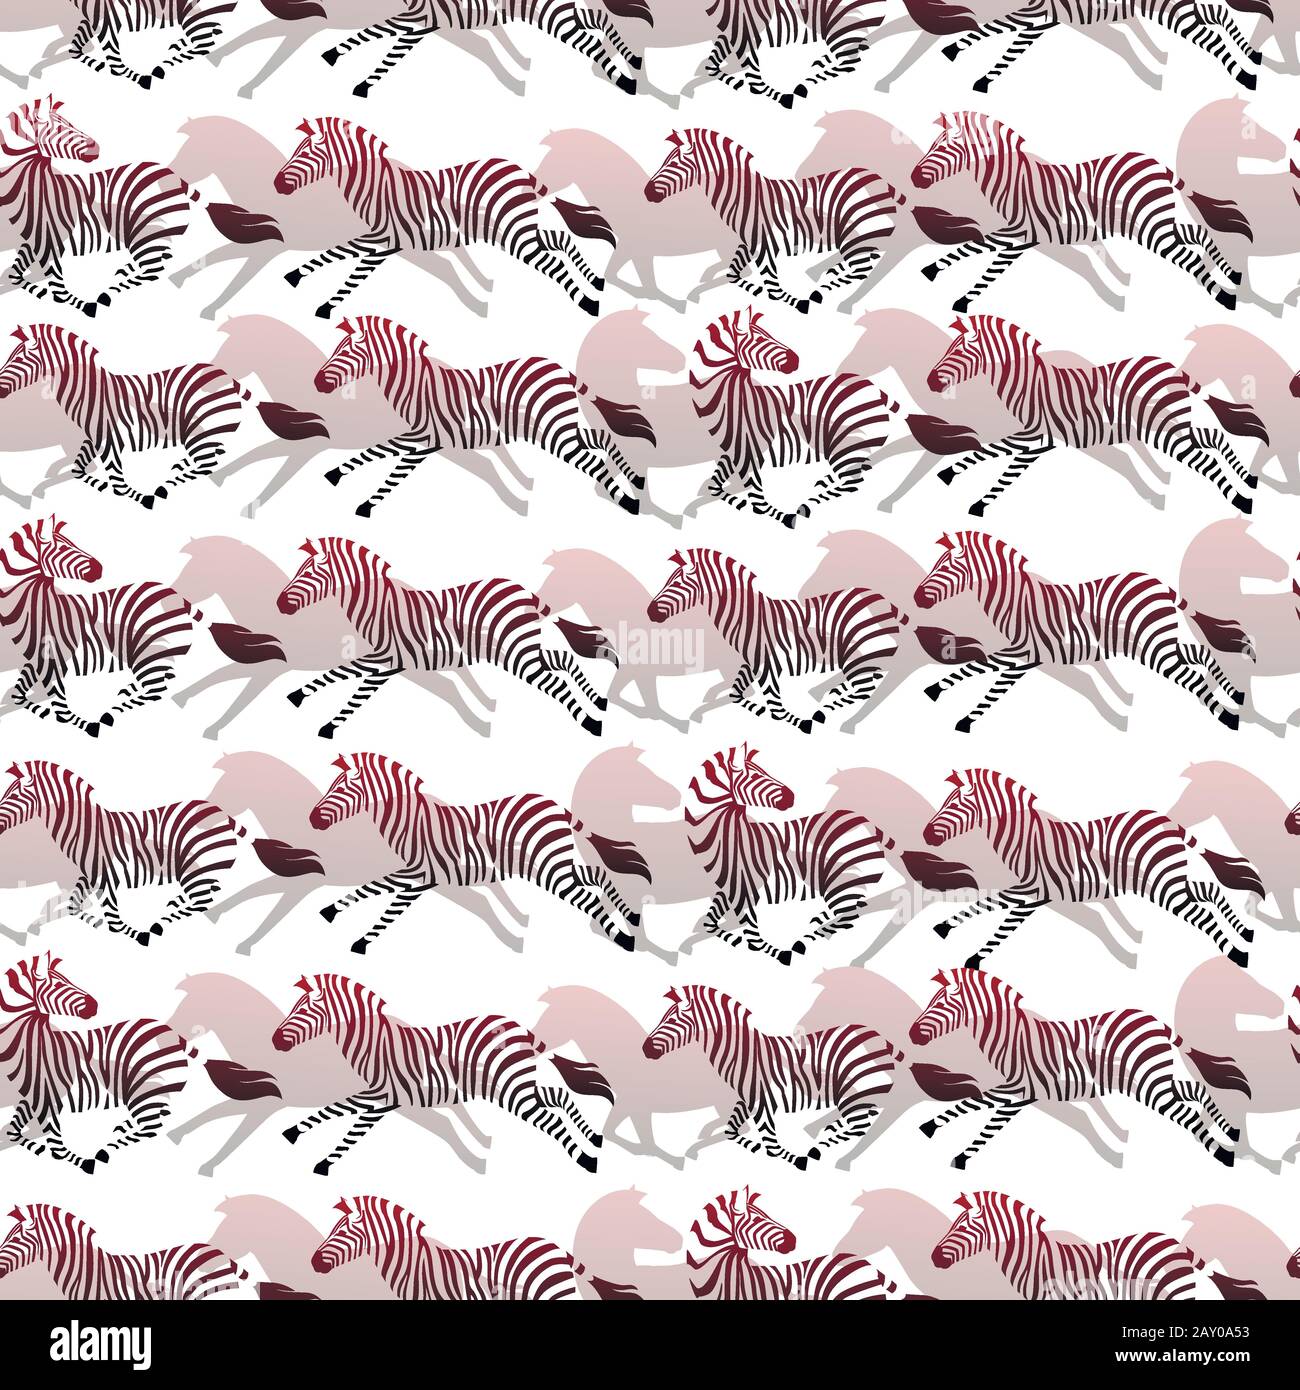 Seamless pattern abstract running zebra silhouette flat vector illustration on white background. Stock Vector